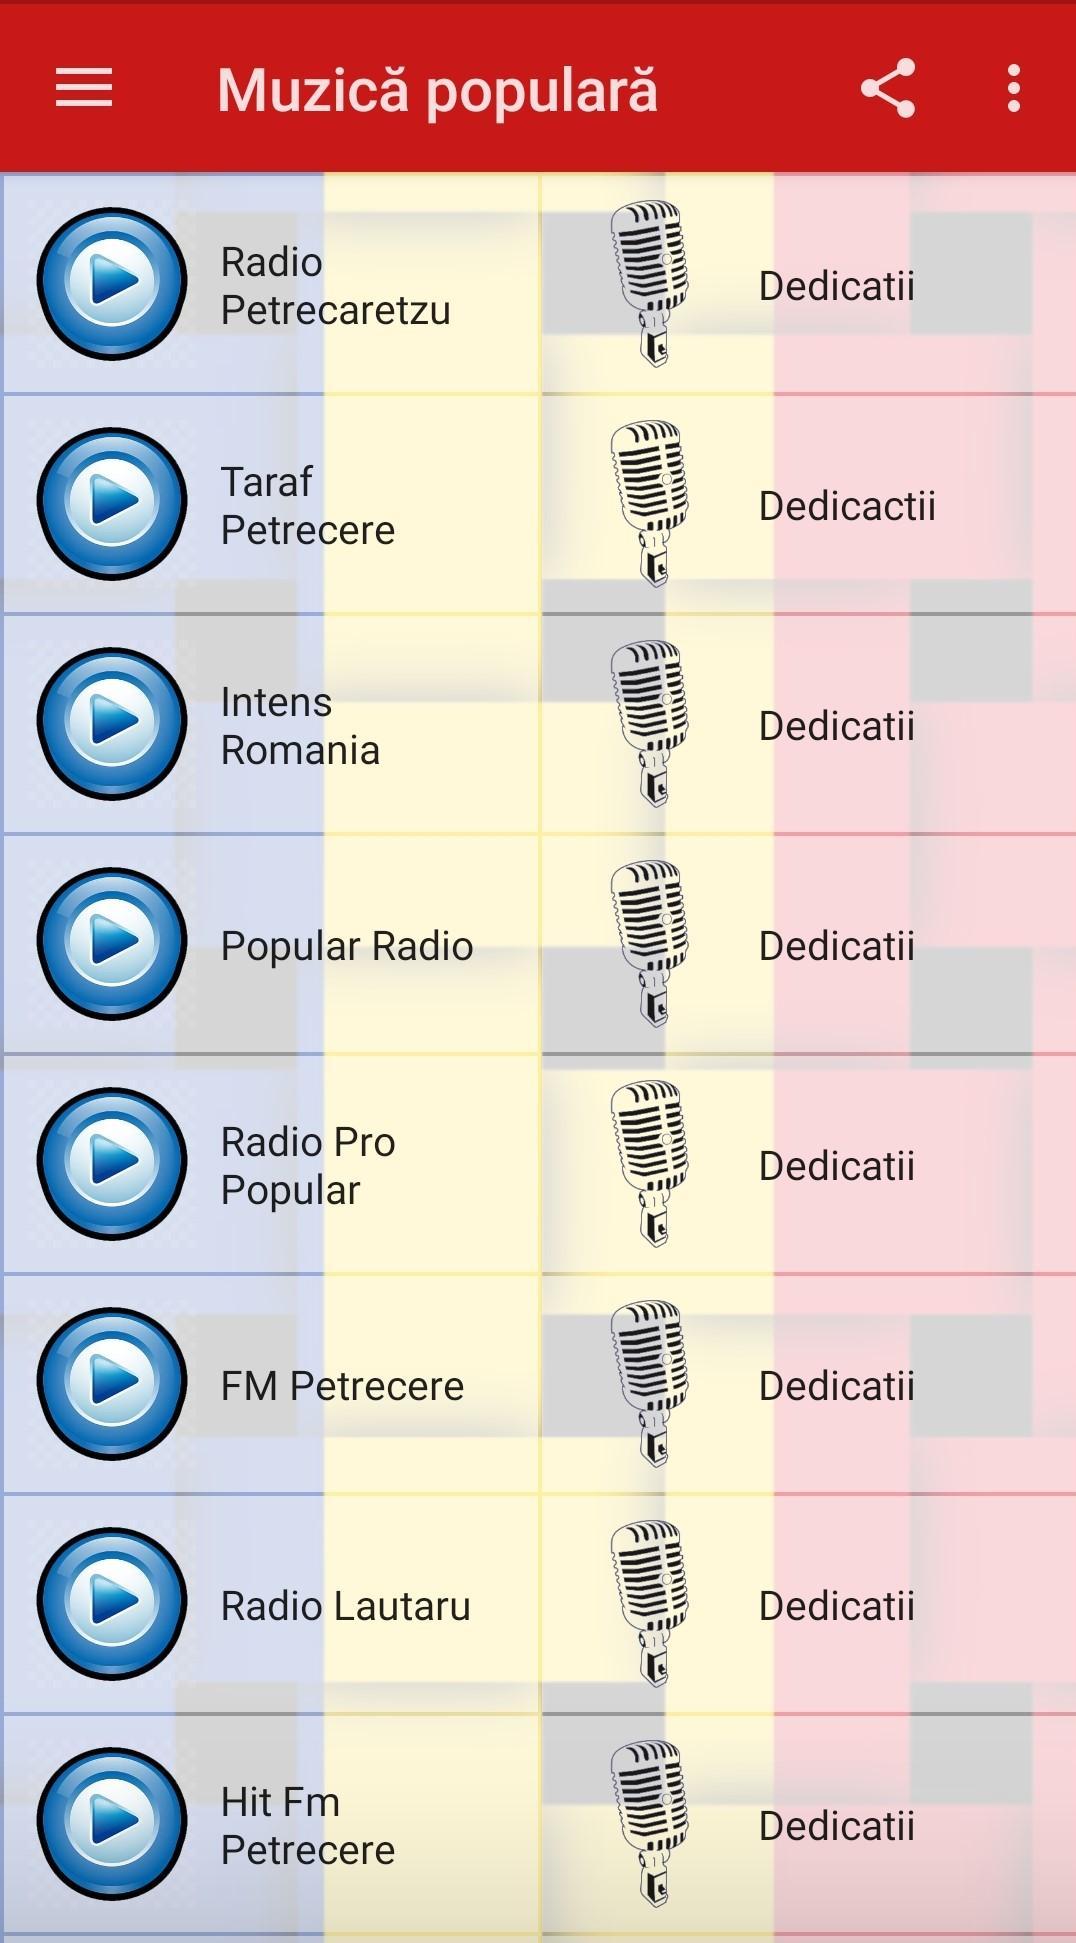 Muzica Populara for Android - APK Download